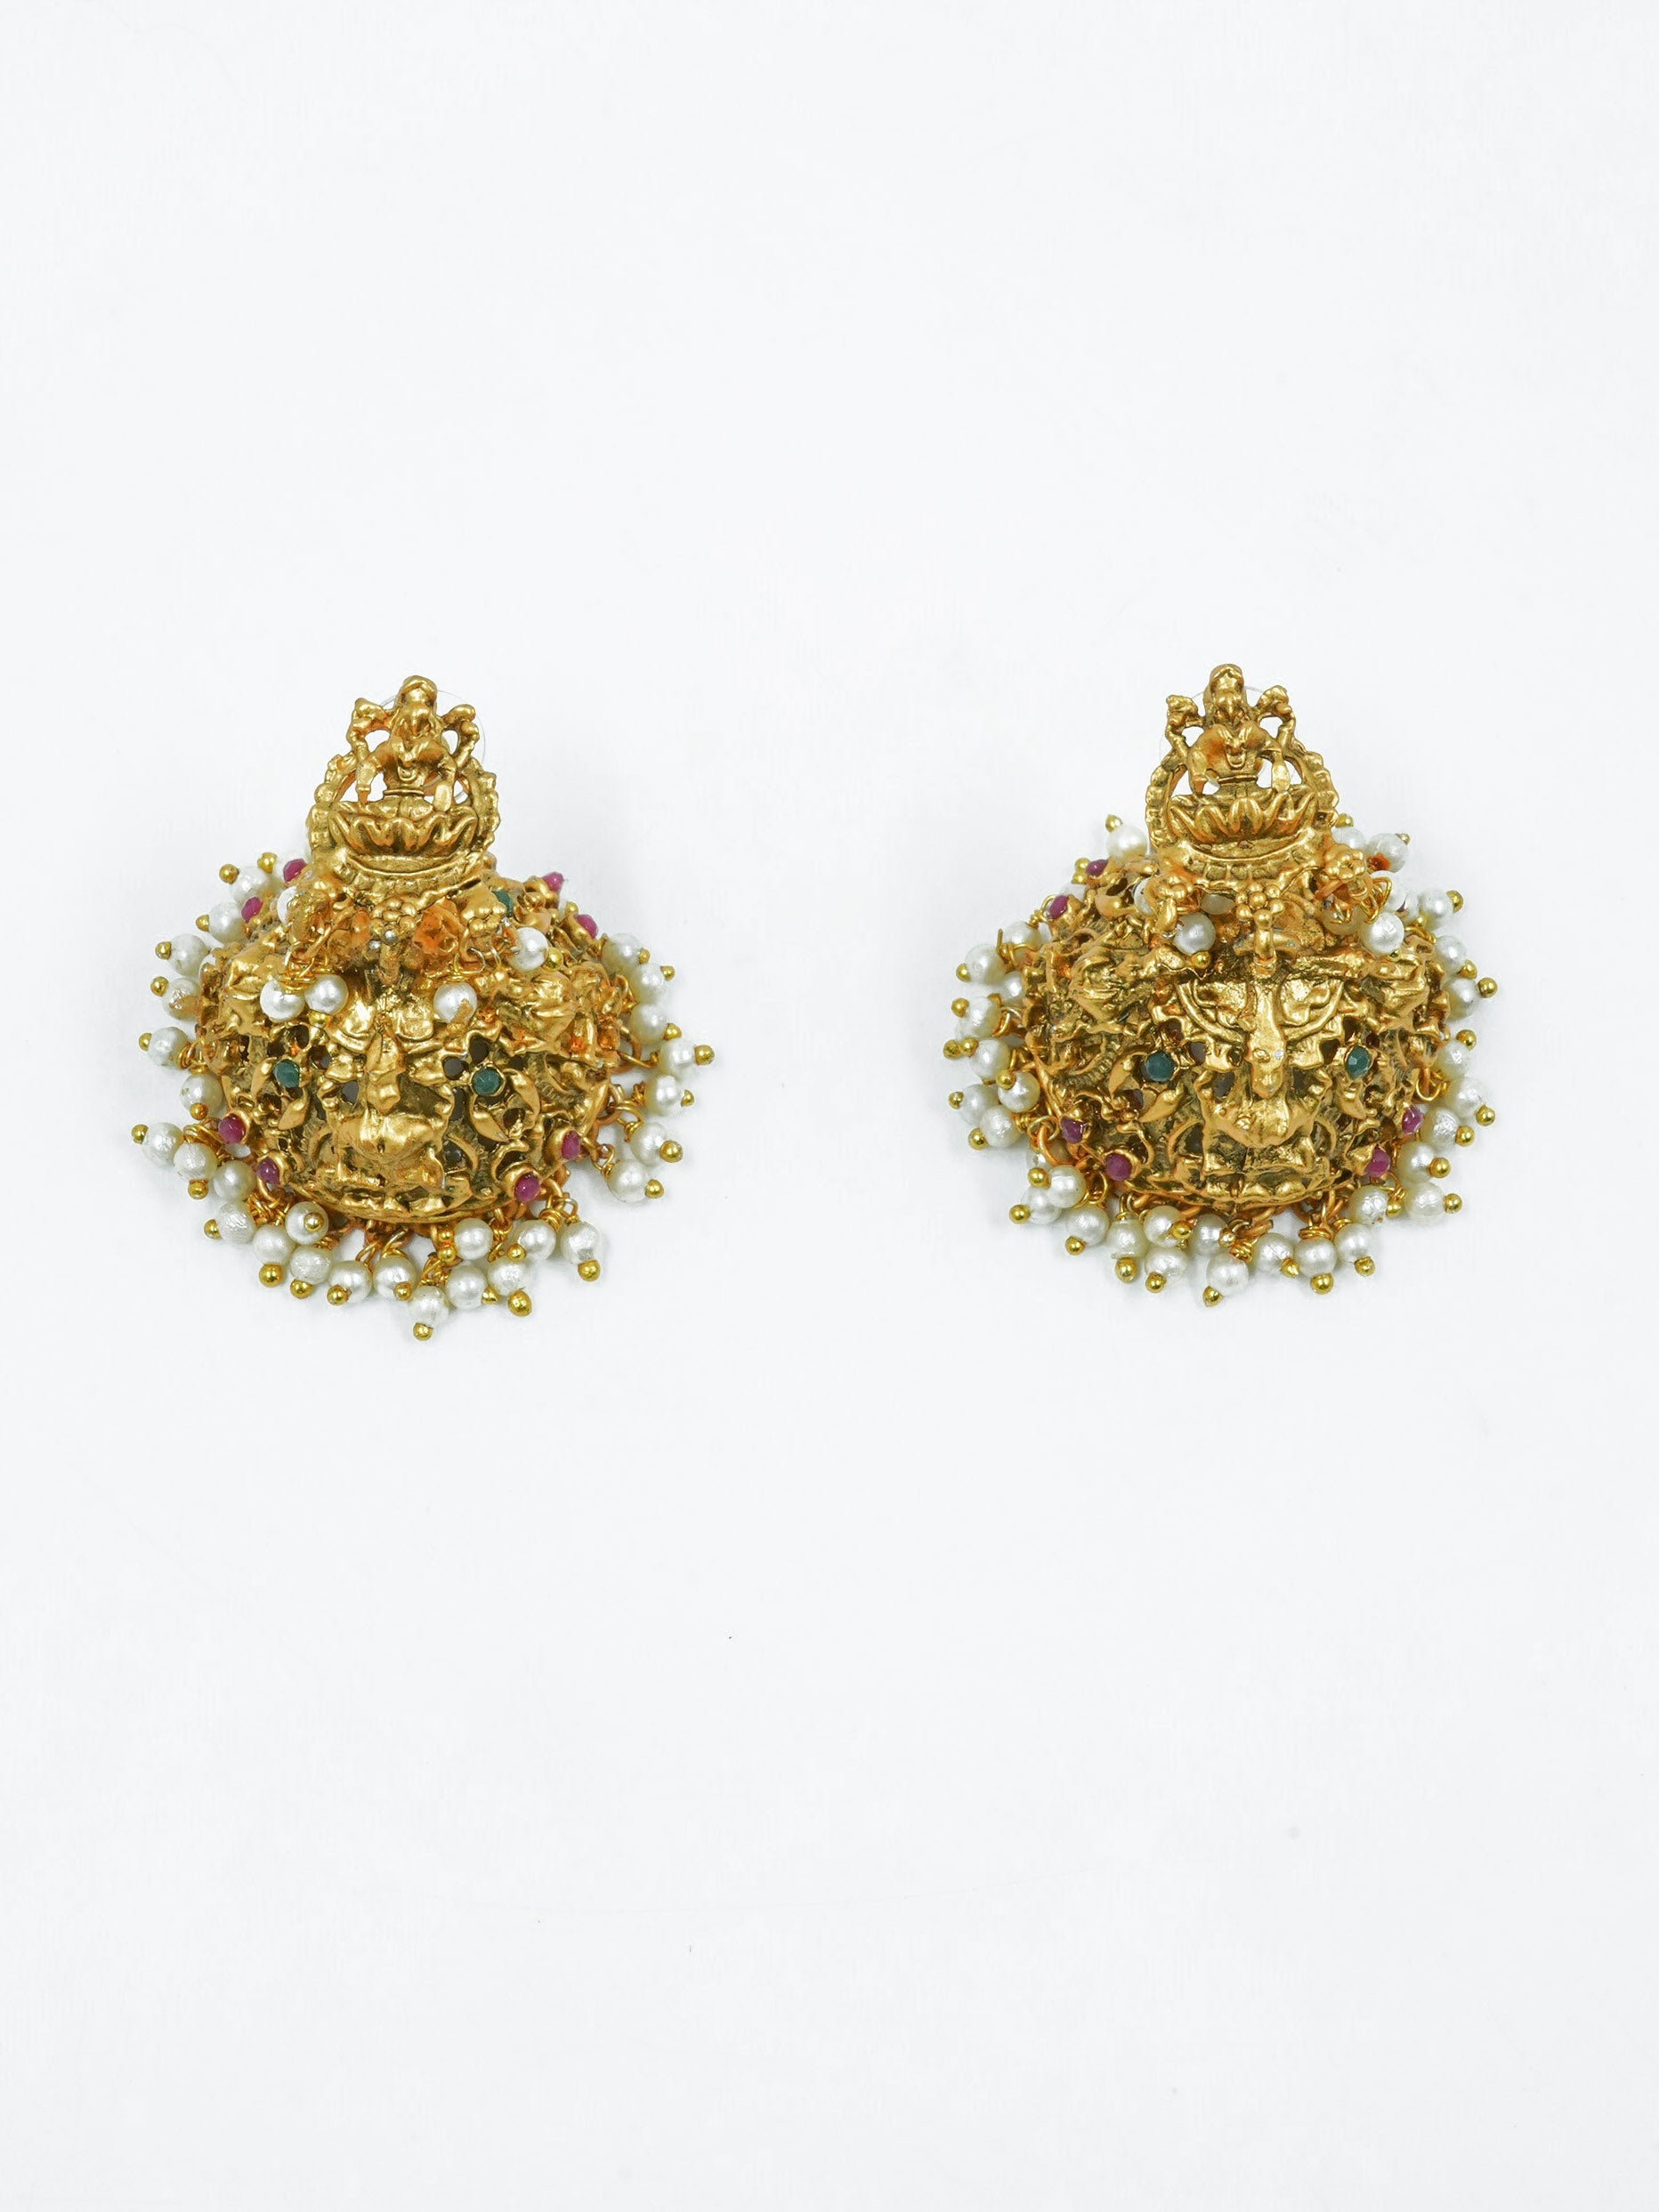 Premium Gold Plated Real kempu Laxmi Jhumka / stud/ earrings 12795N